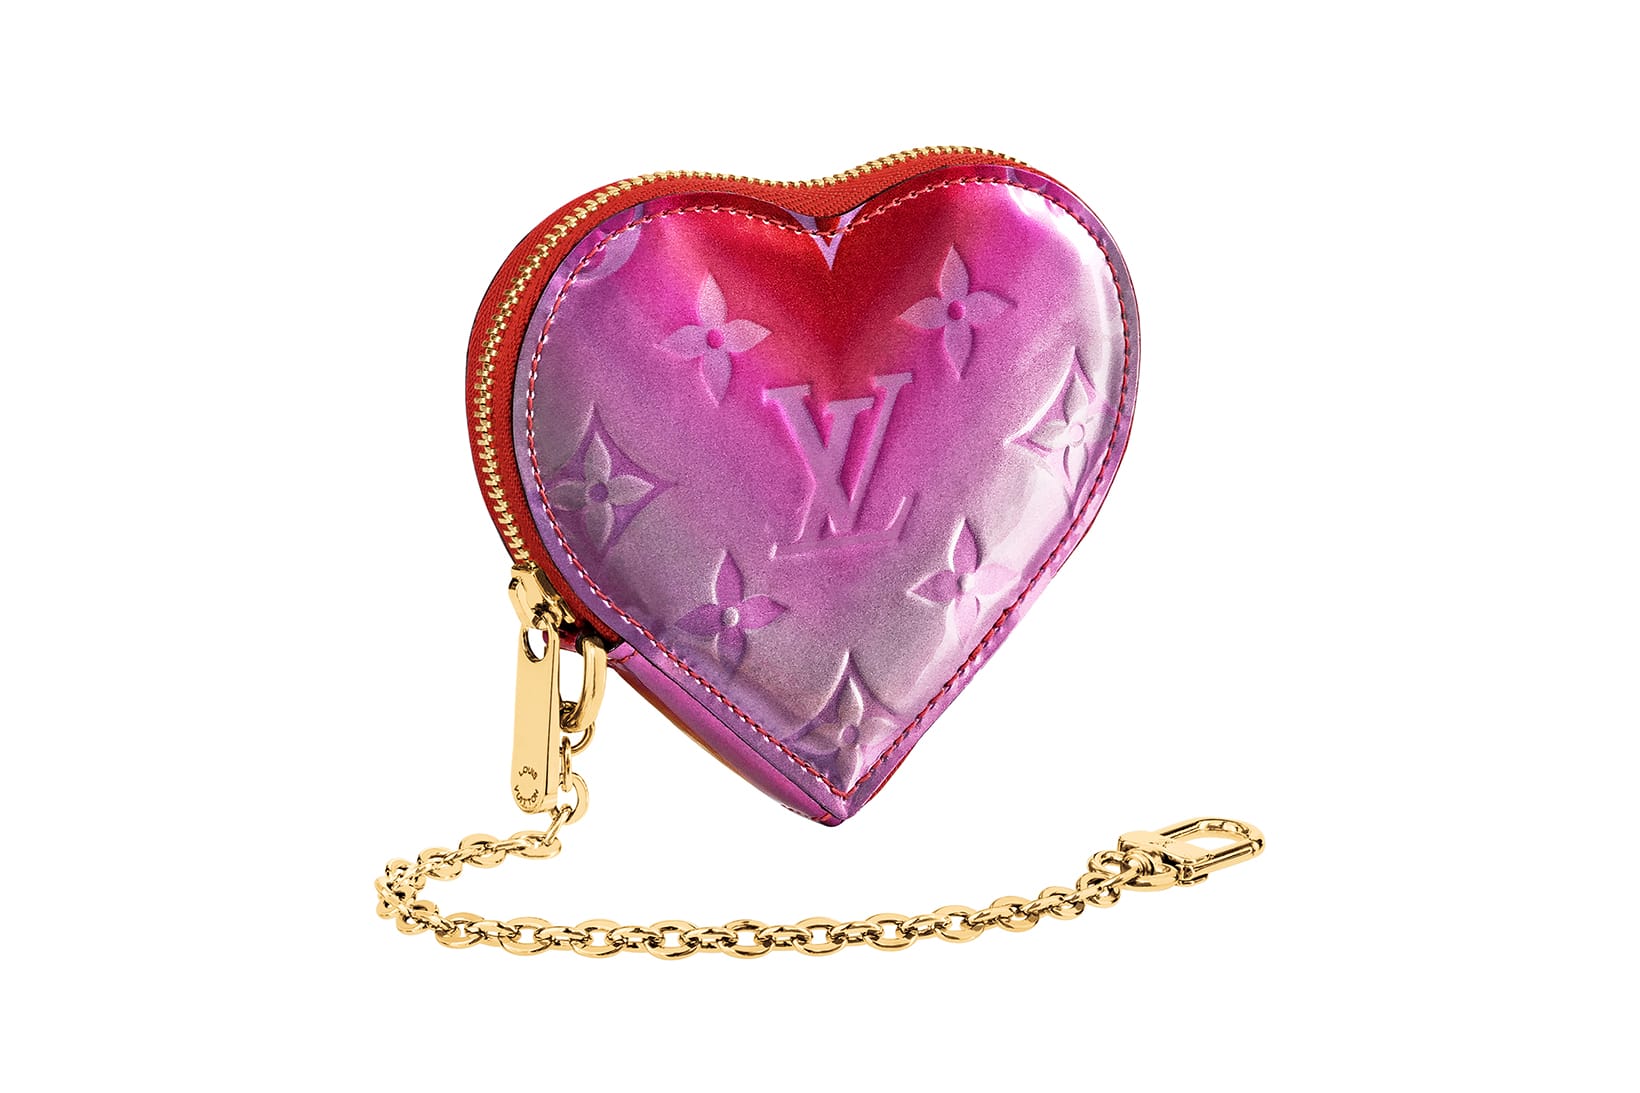 kate spade new york - shop be mine heart coin purse: http://bit.ly/2jG60wV  | Facebook